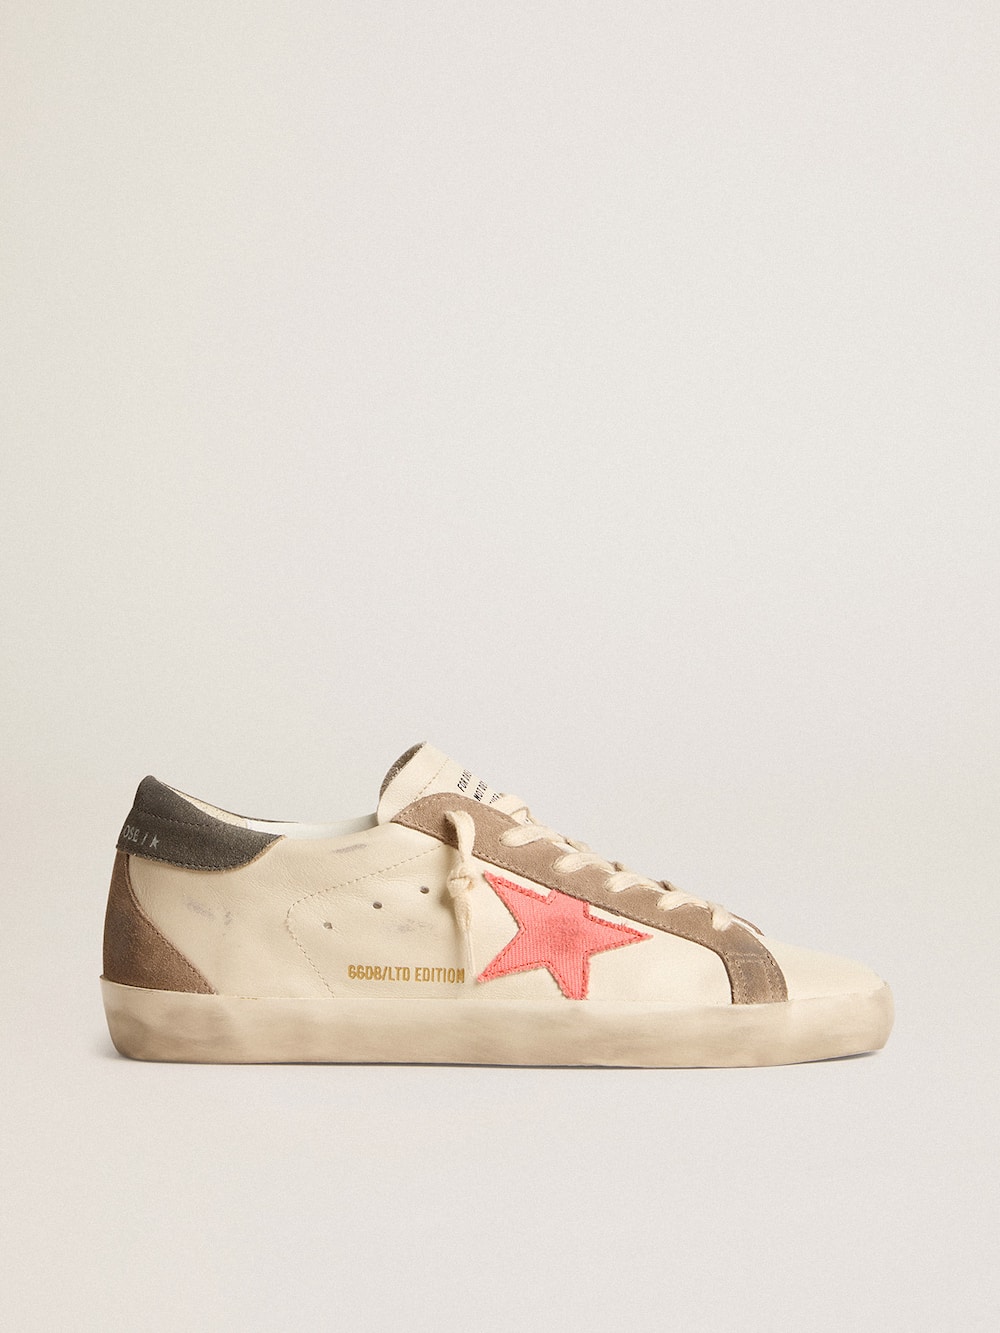 Golden Goose - Super-Star LTD with pink gabardine star and gray suede heel tab in 